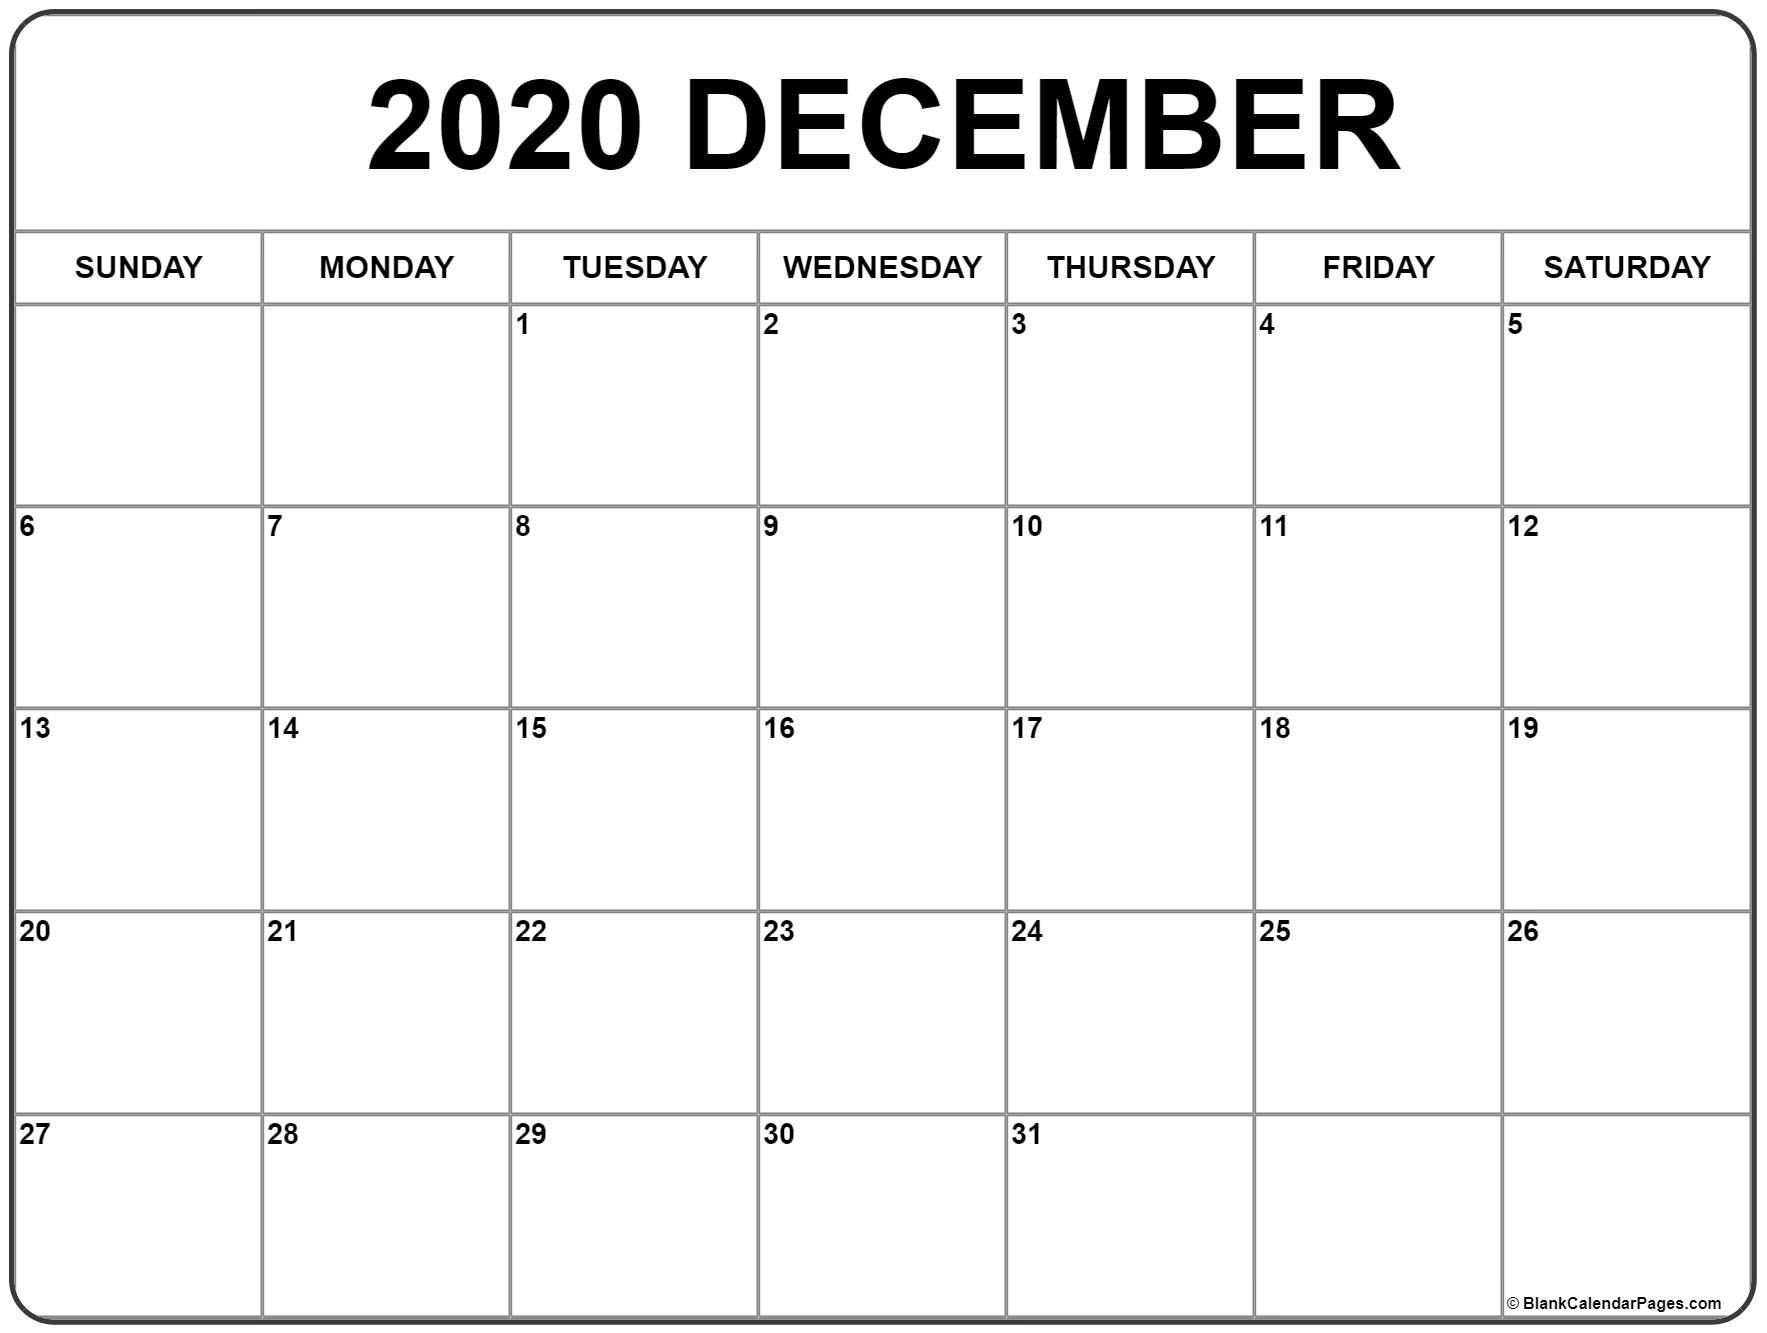 December 2020 Printable Calendar Template #2020Calendars-Blank Monthly Calendar Printable 2020 Monday Start